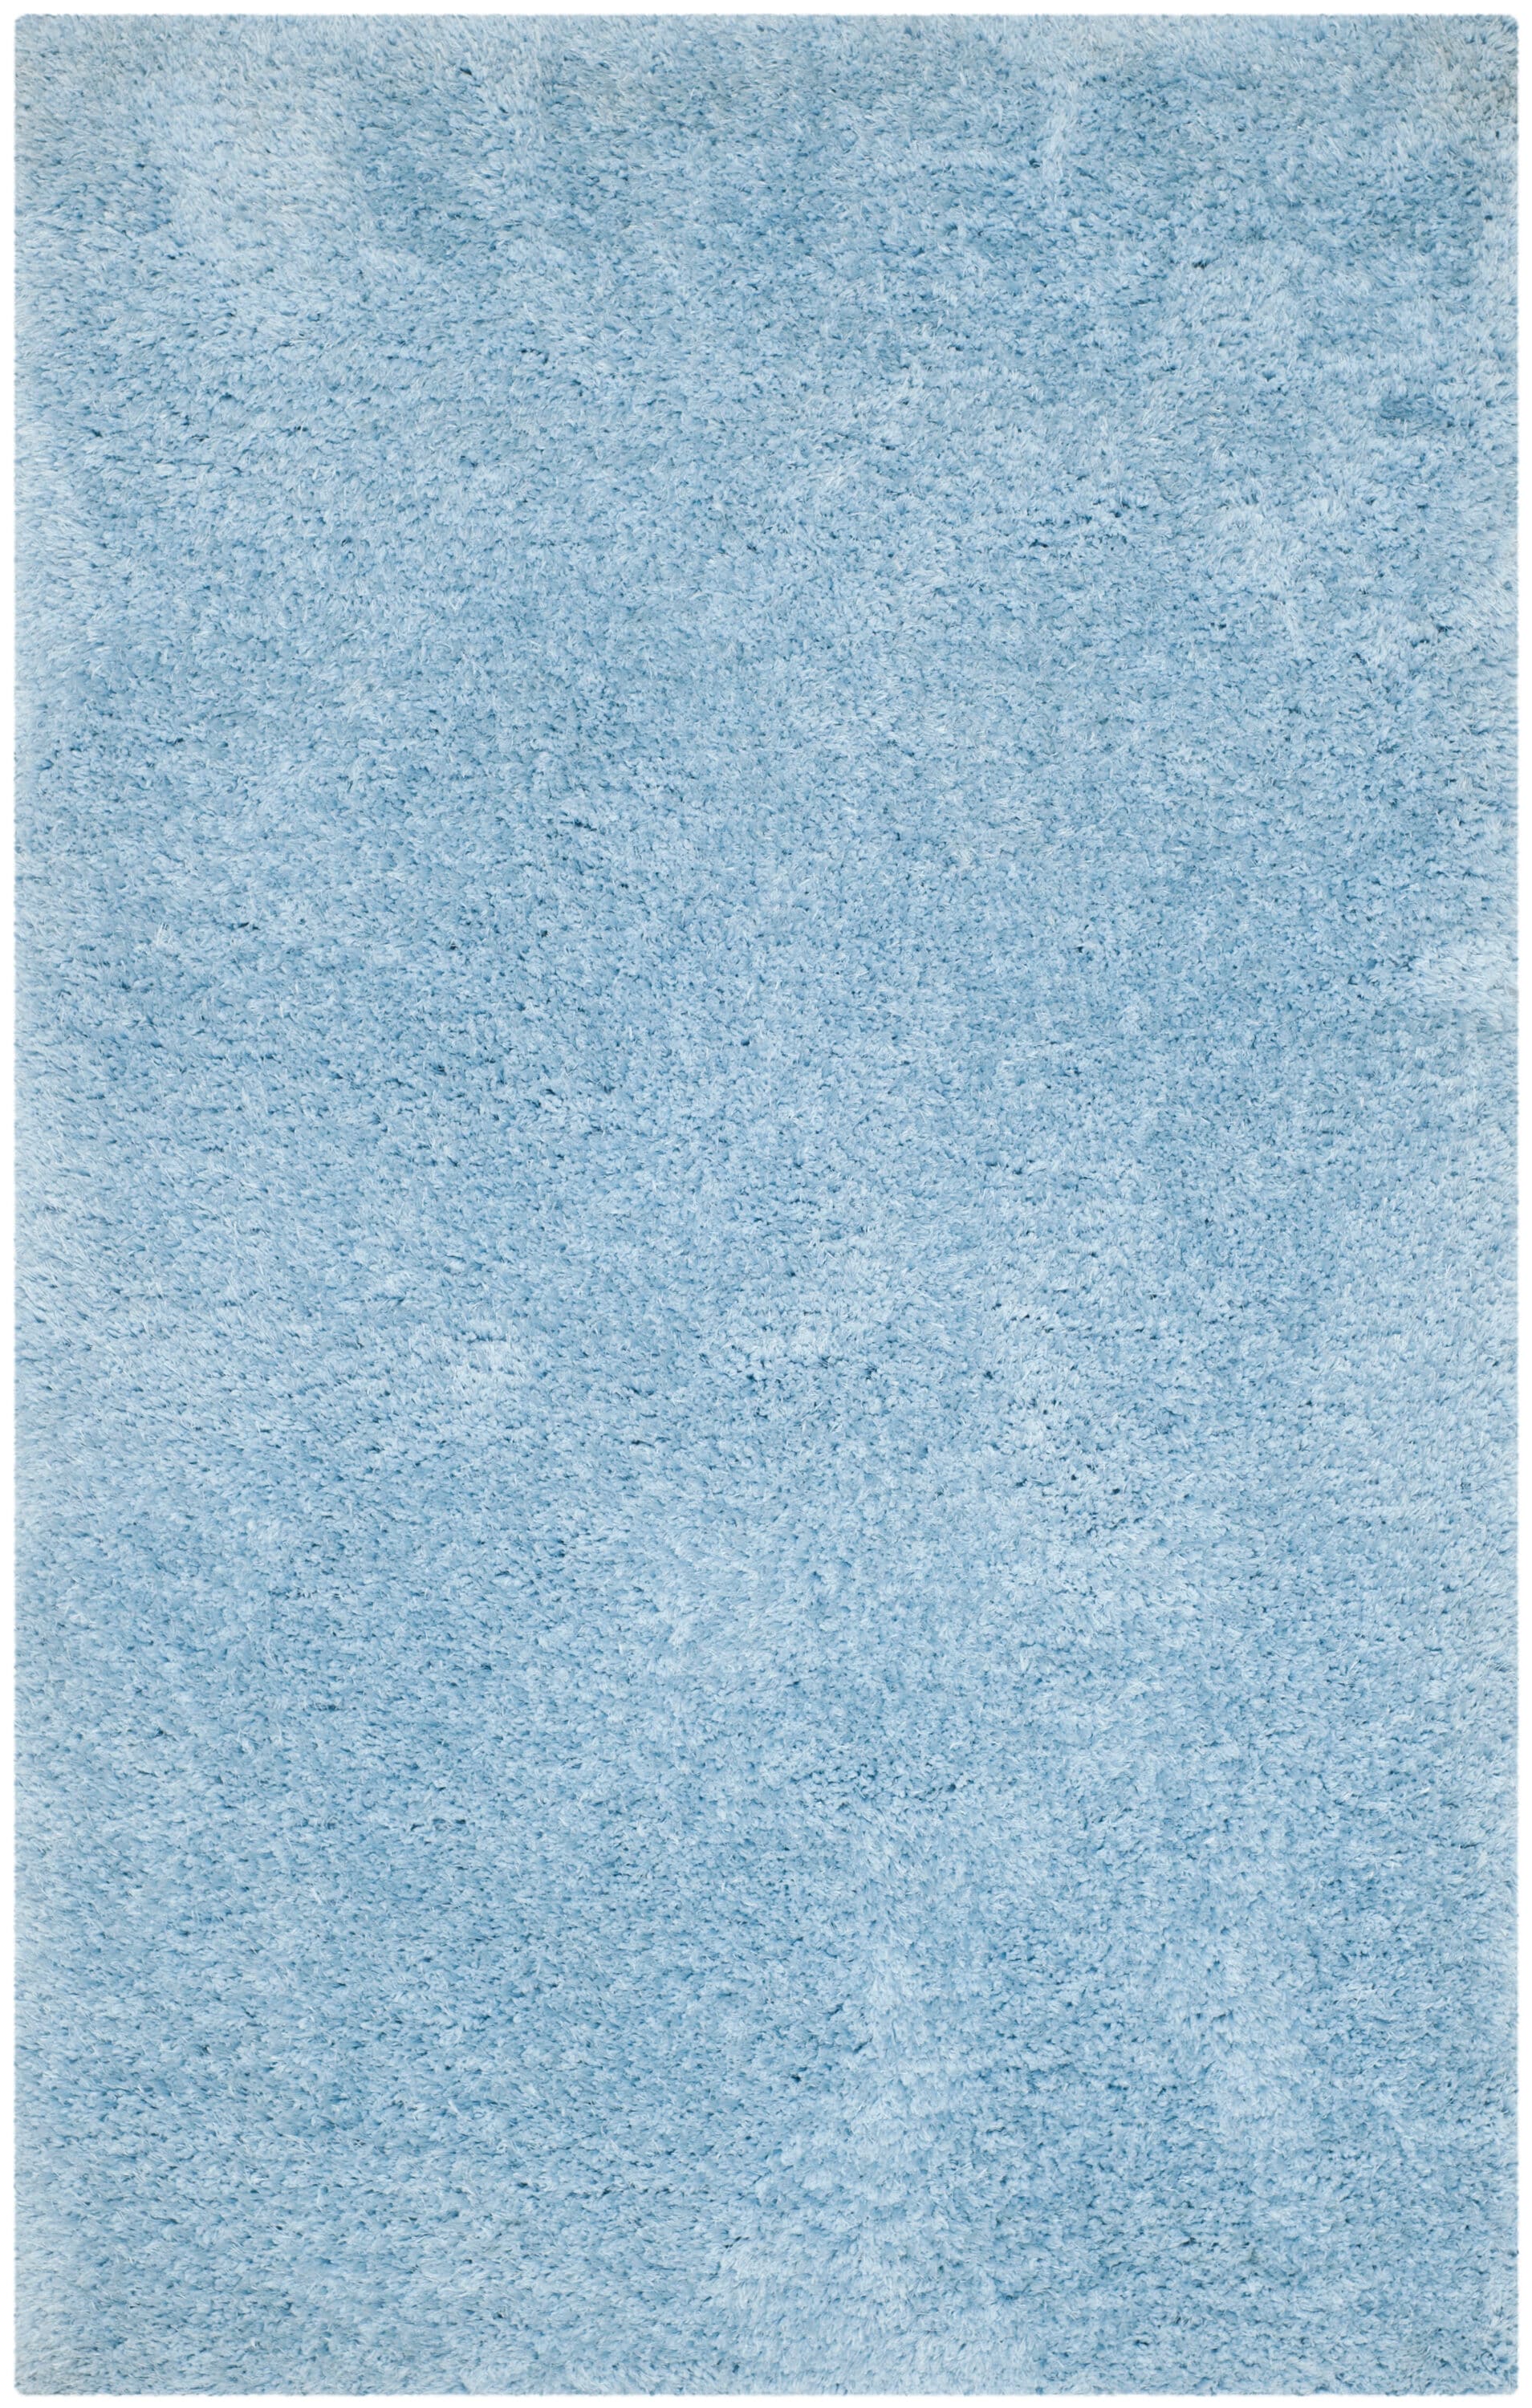  SAFAVIEH Supreme Shag Collection 4' x 6' Light Blue